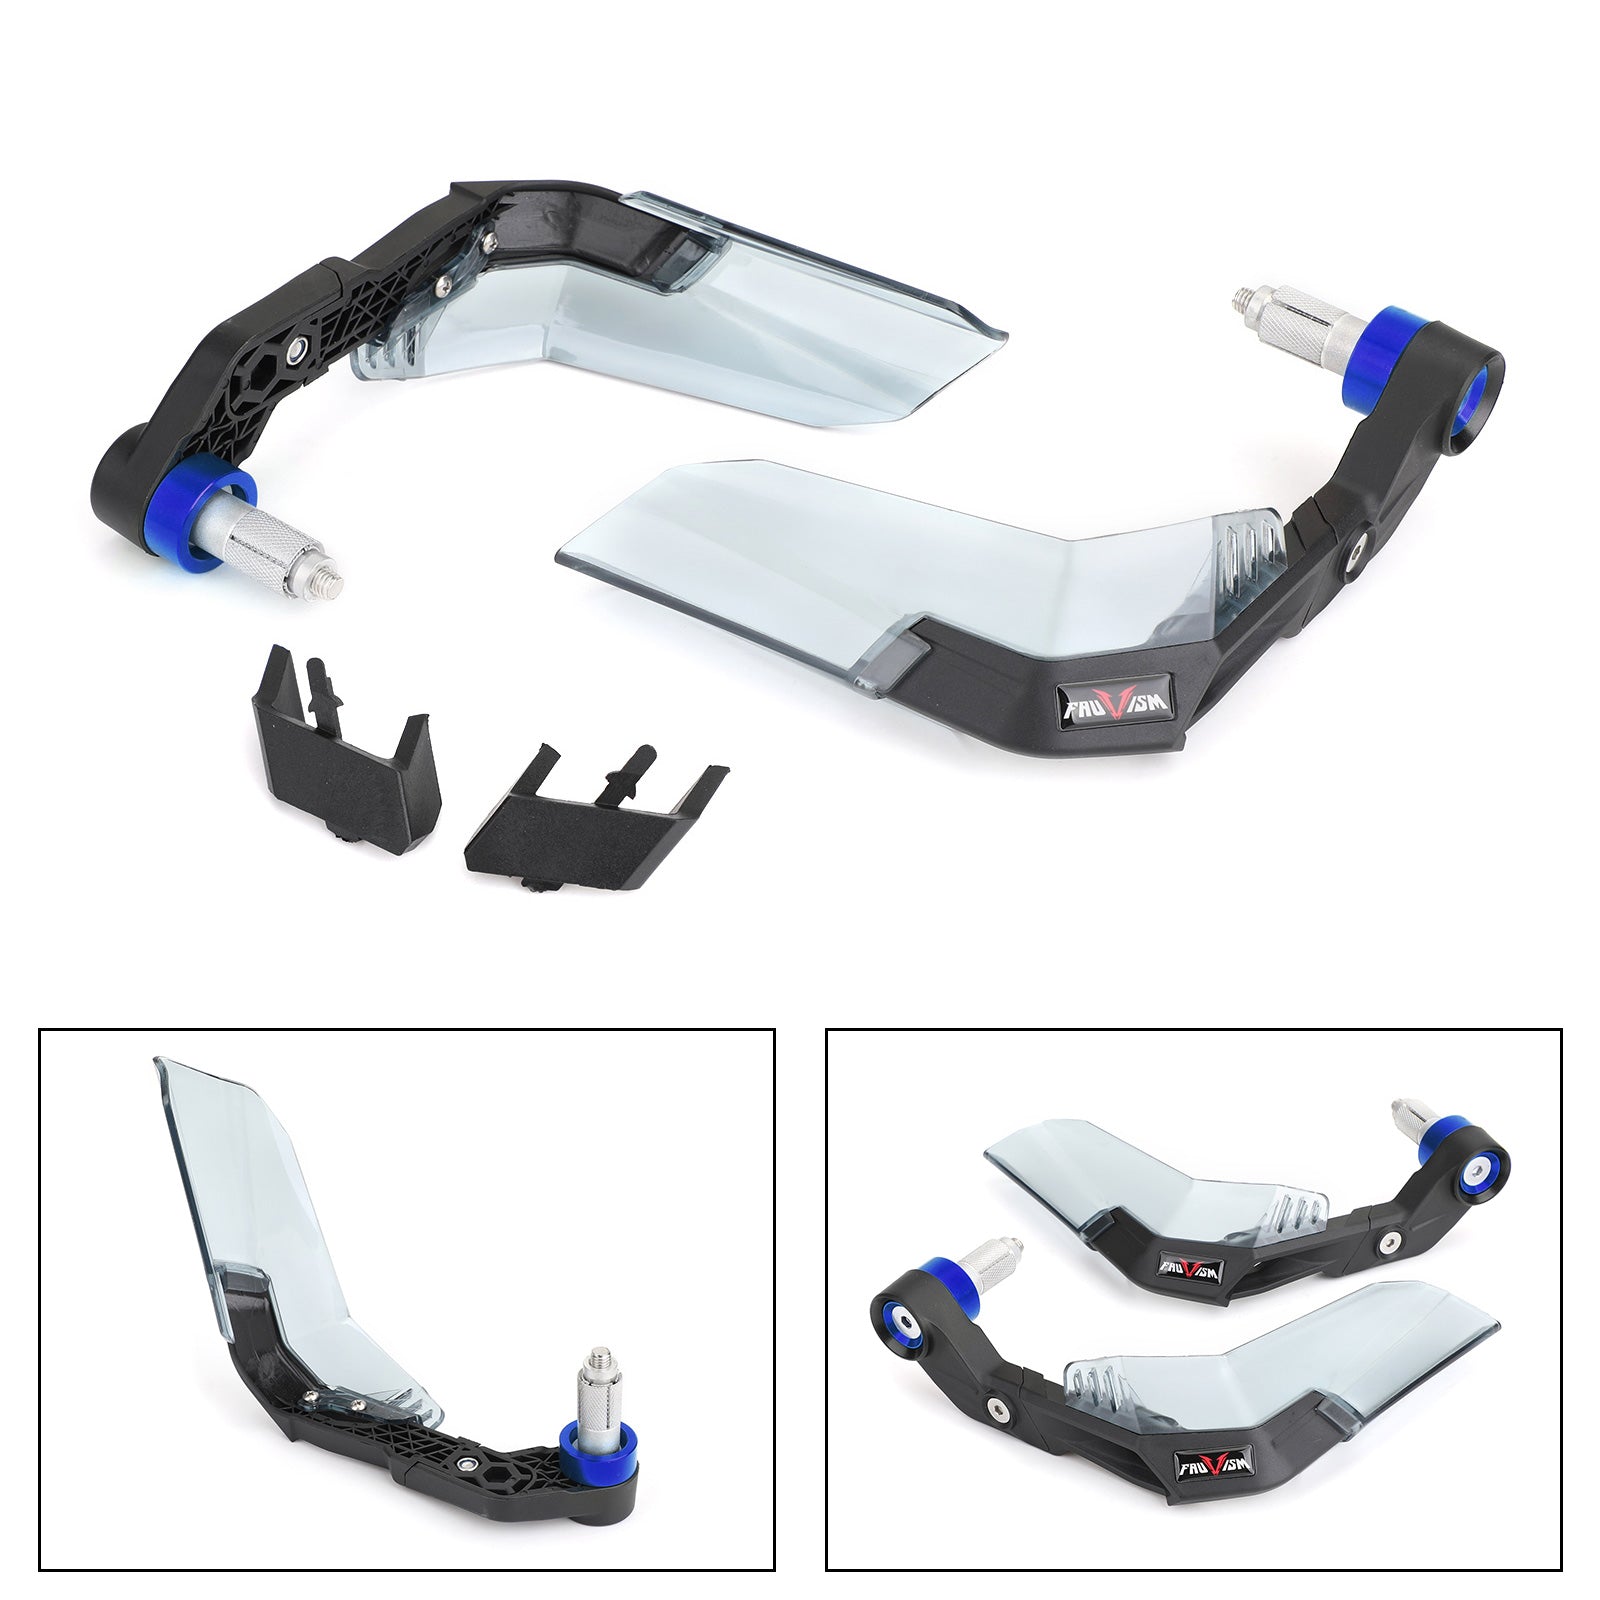 Protezione universale per gusci manubrio paramani moto per Honda Yamaha KTM Generico